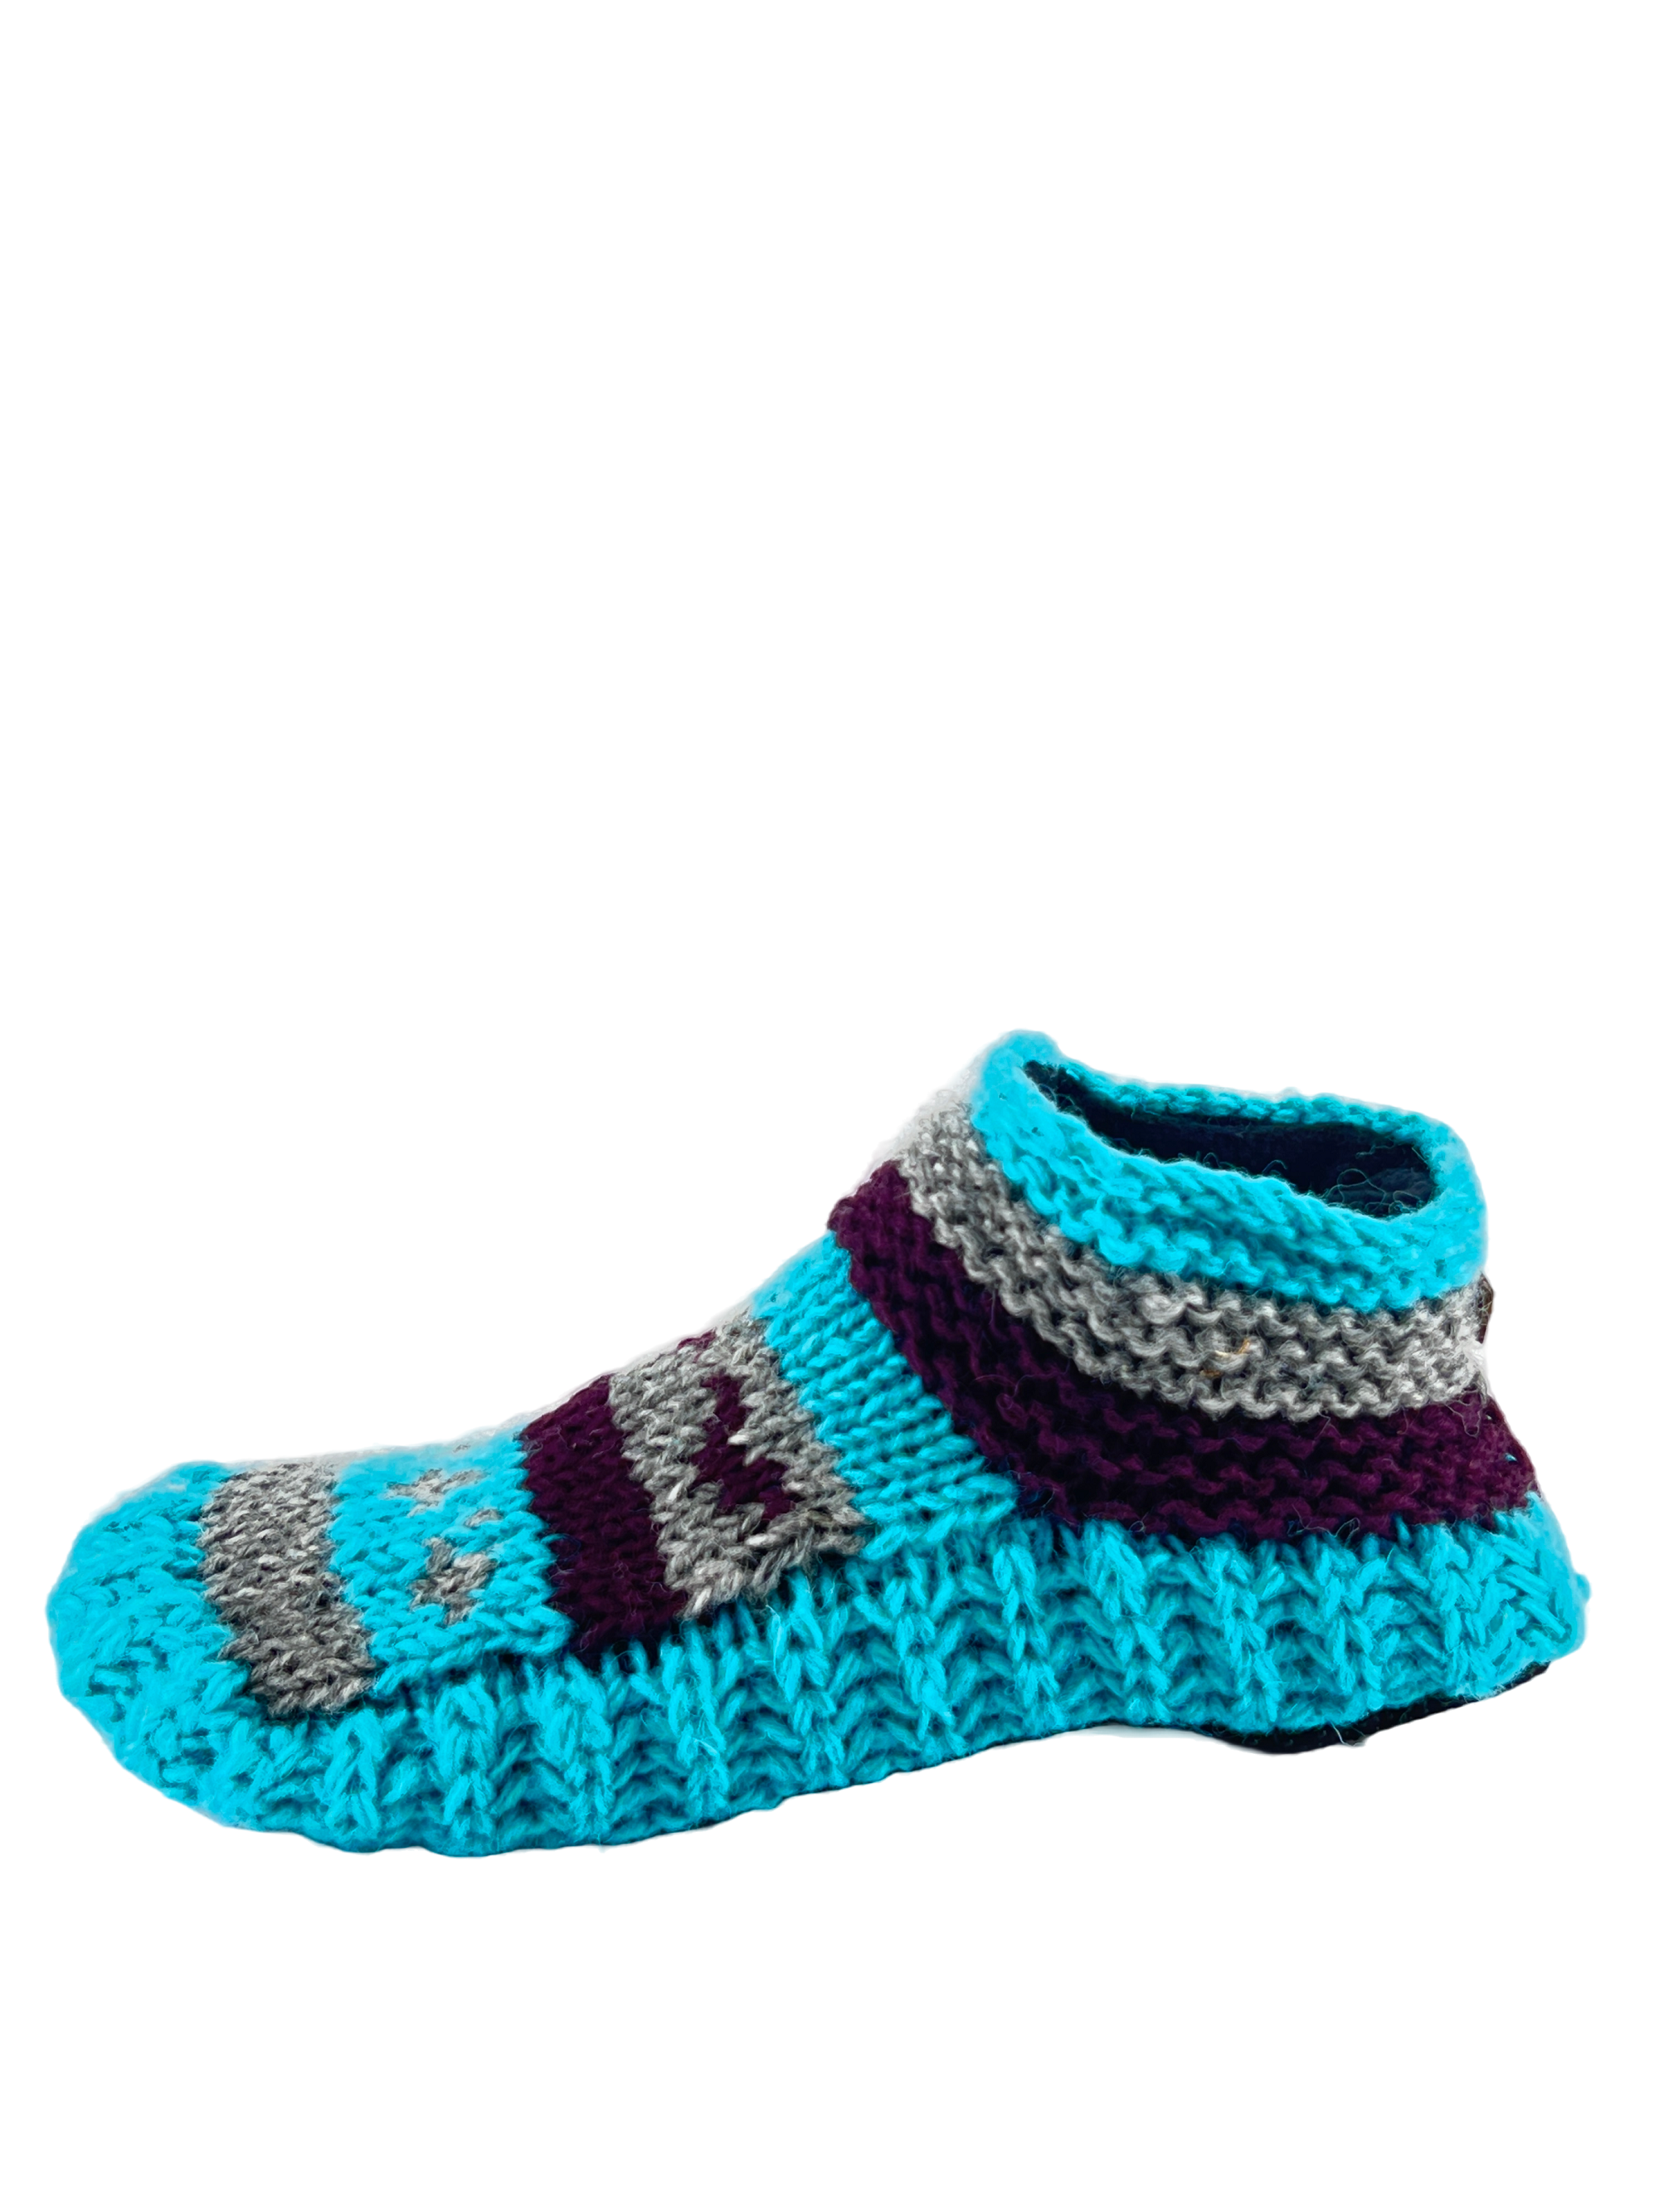 Women’s Non-Slip Hand Knitted Woolen Slippers Socks |  Fun Fuzzy slippers |Christmas soft walking indoor booties | Fleece Lined winter socks